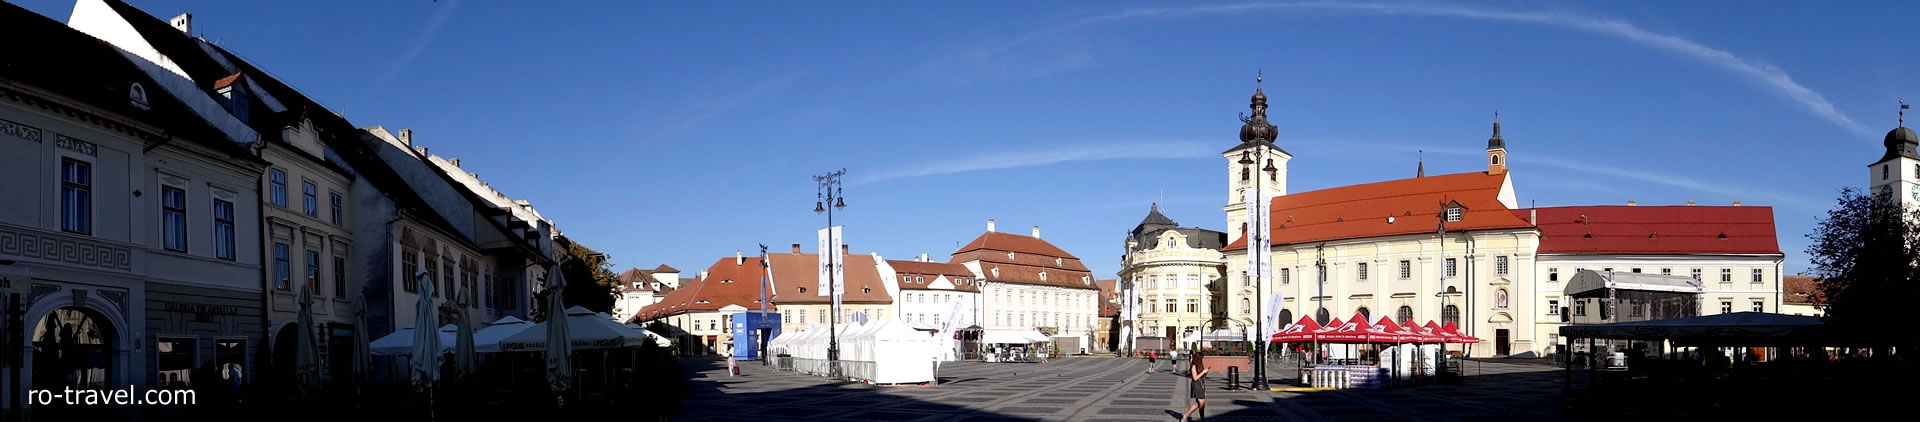 Big Square Sibiu